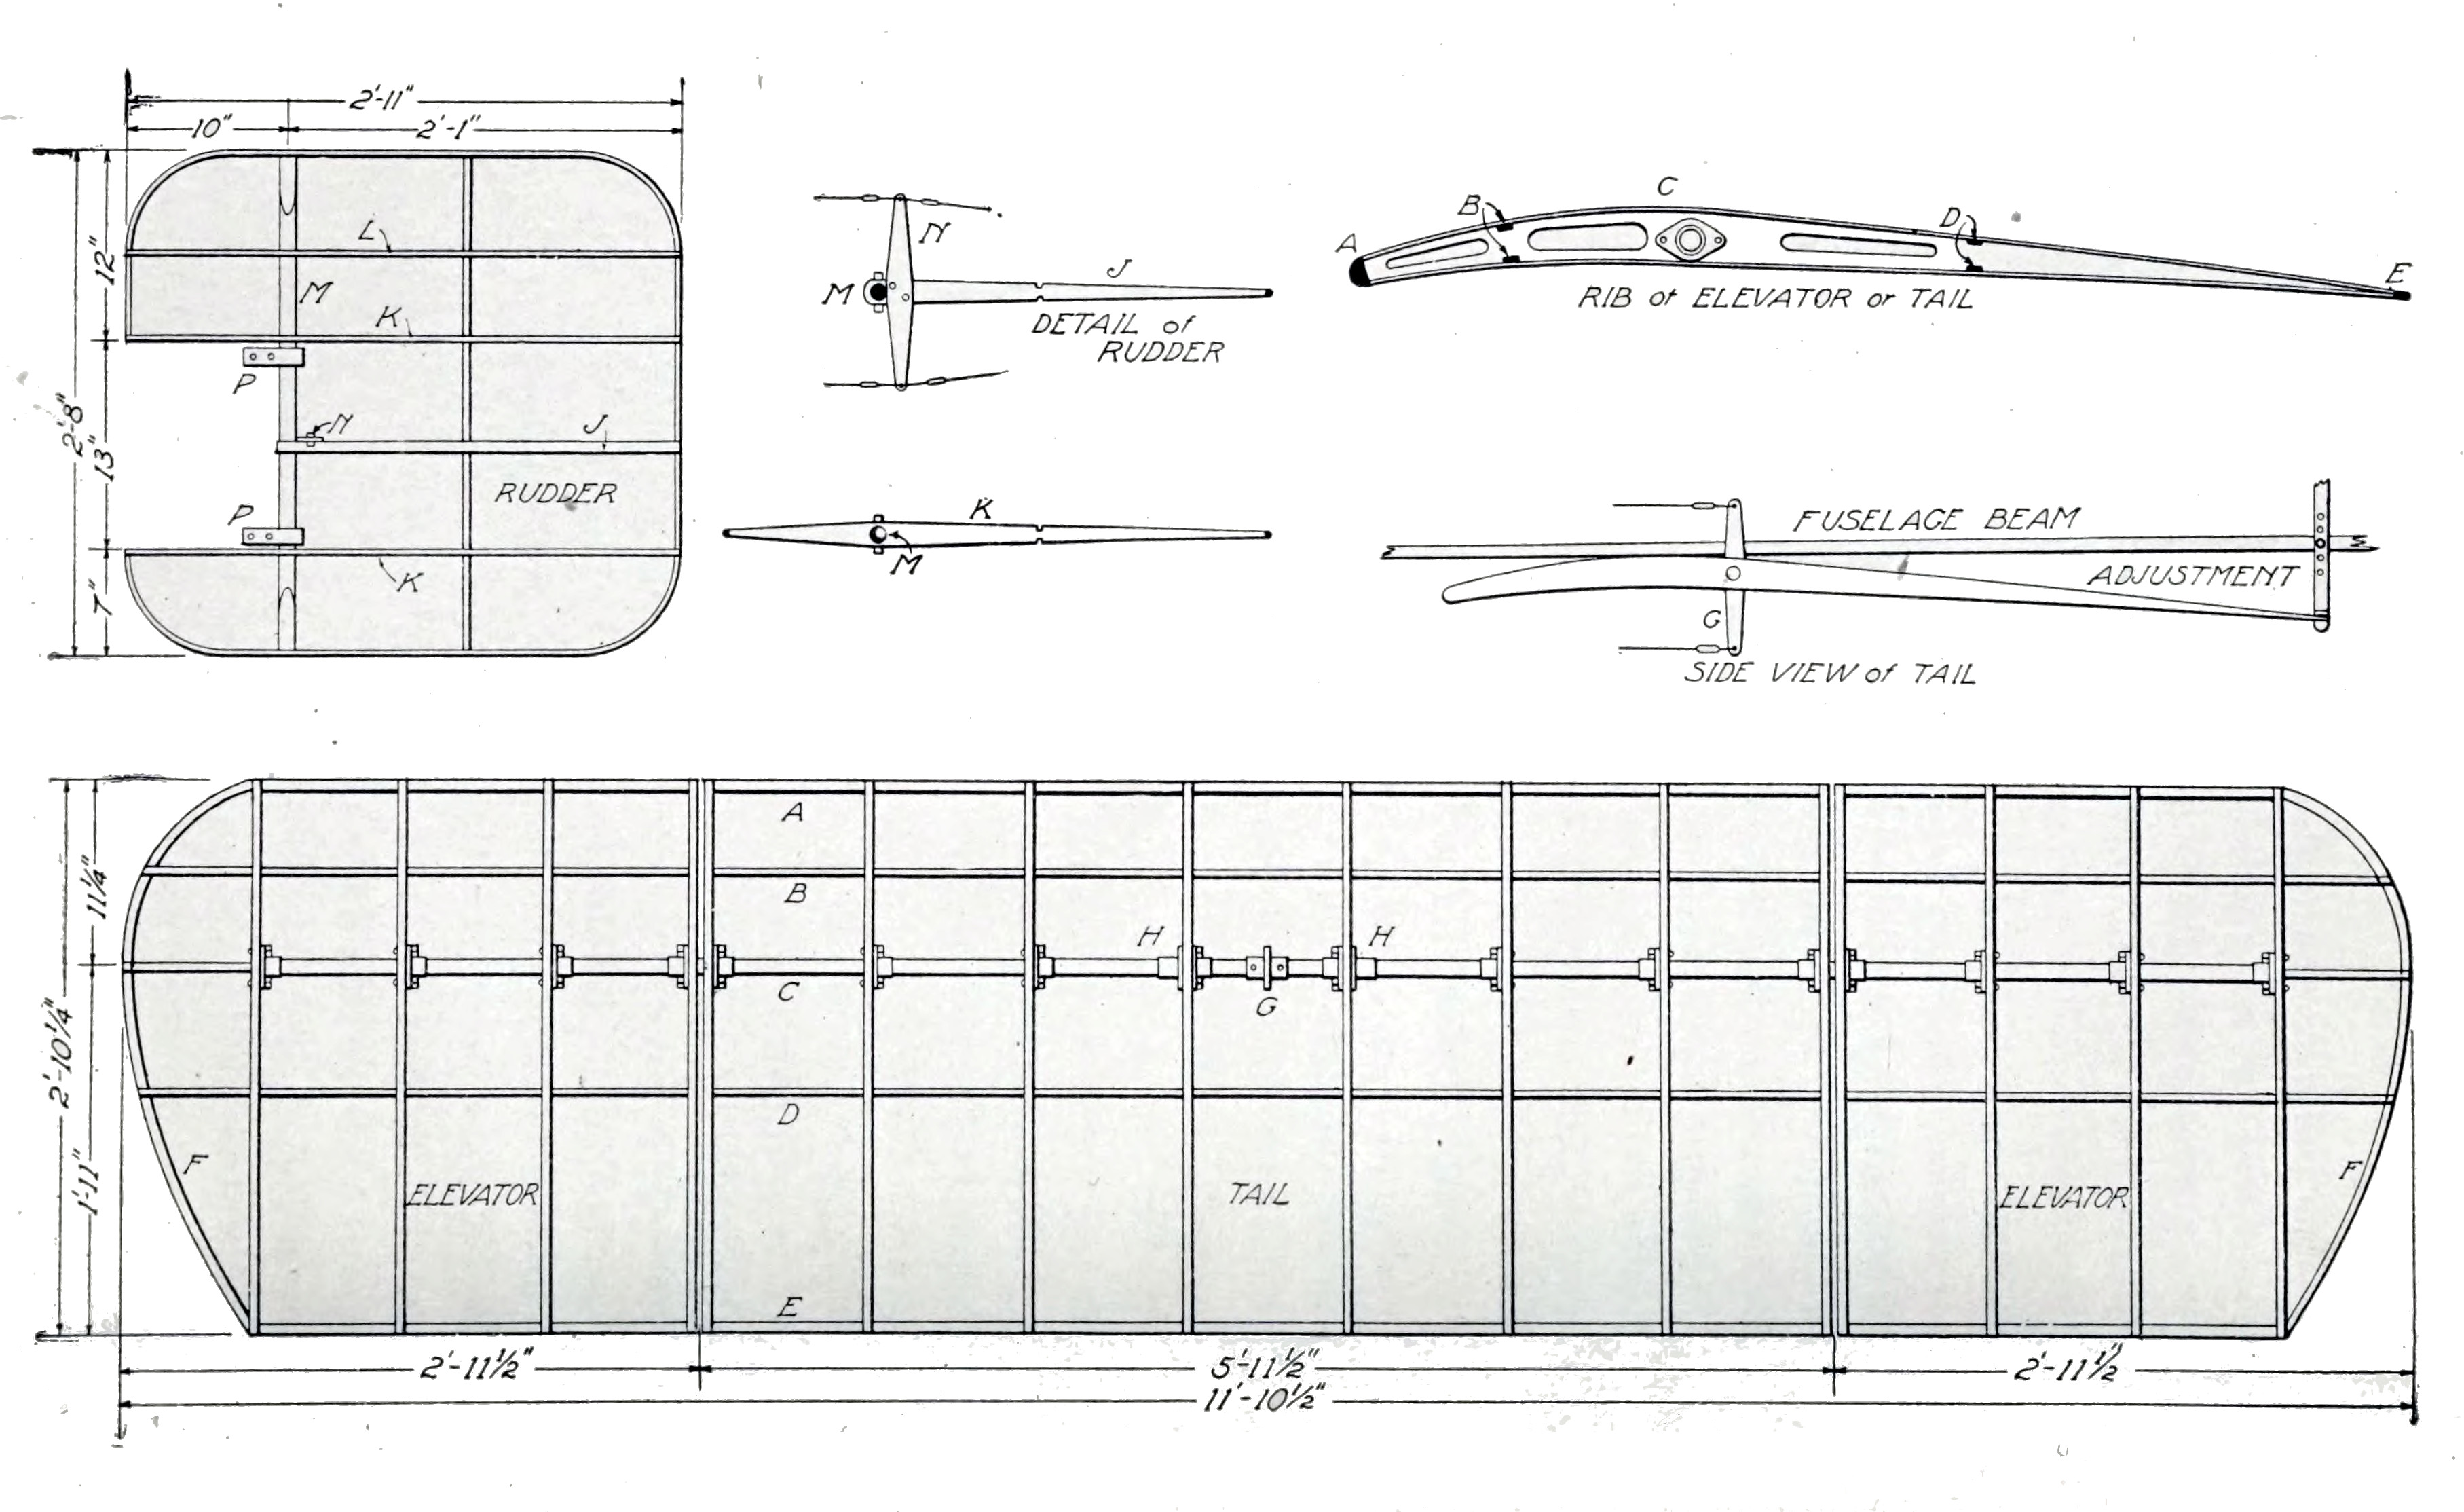 Fig. 33. Construction Details of Bleriot Tail, Elevators, and Rudder